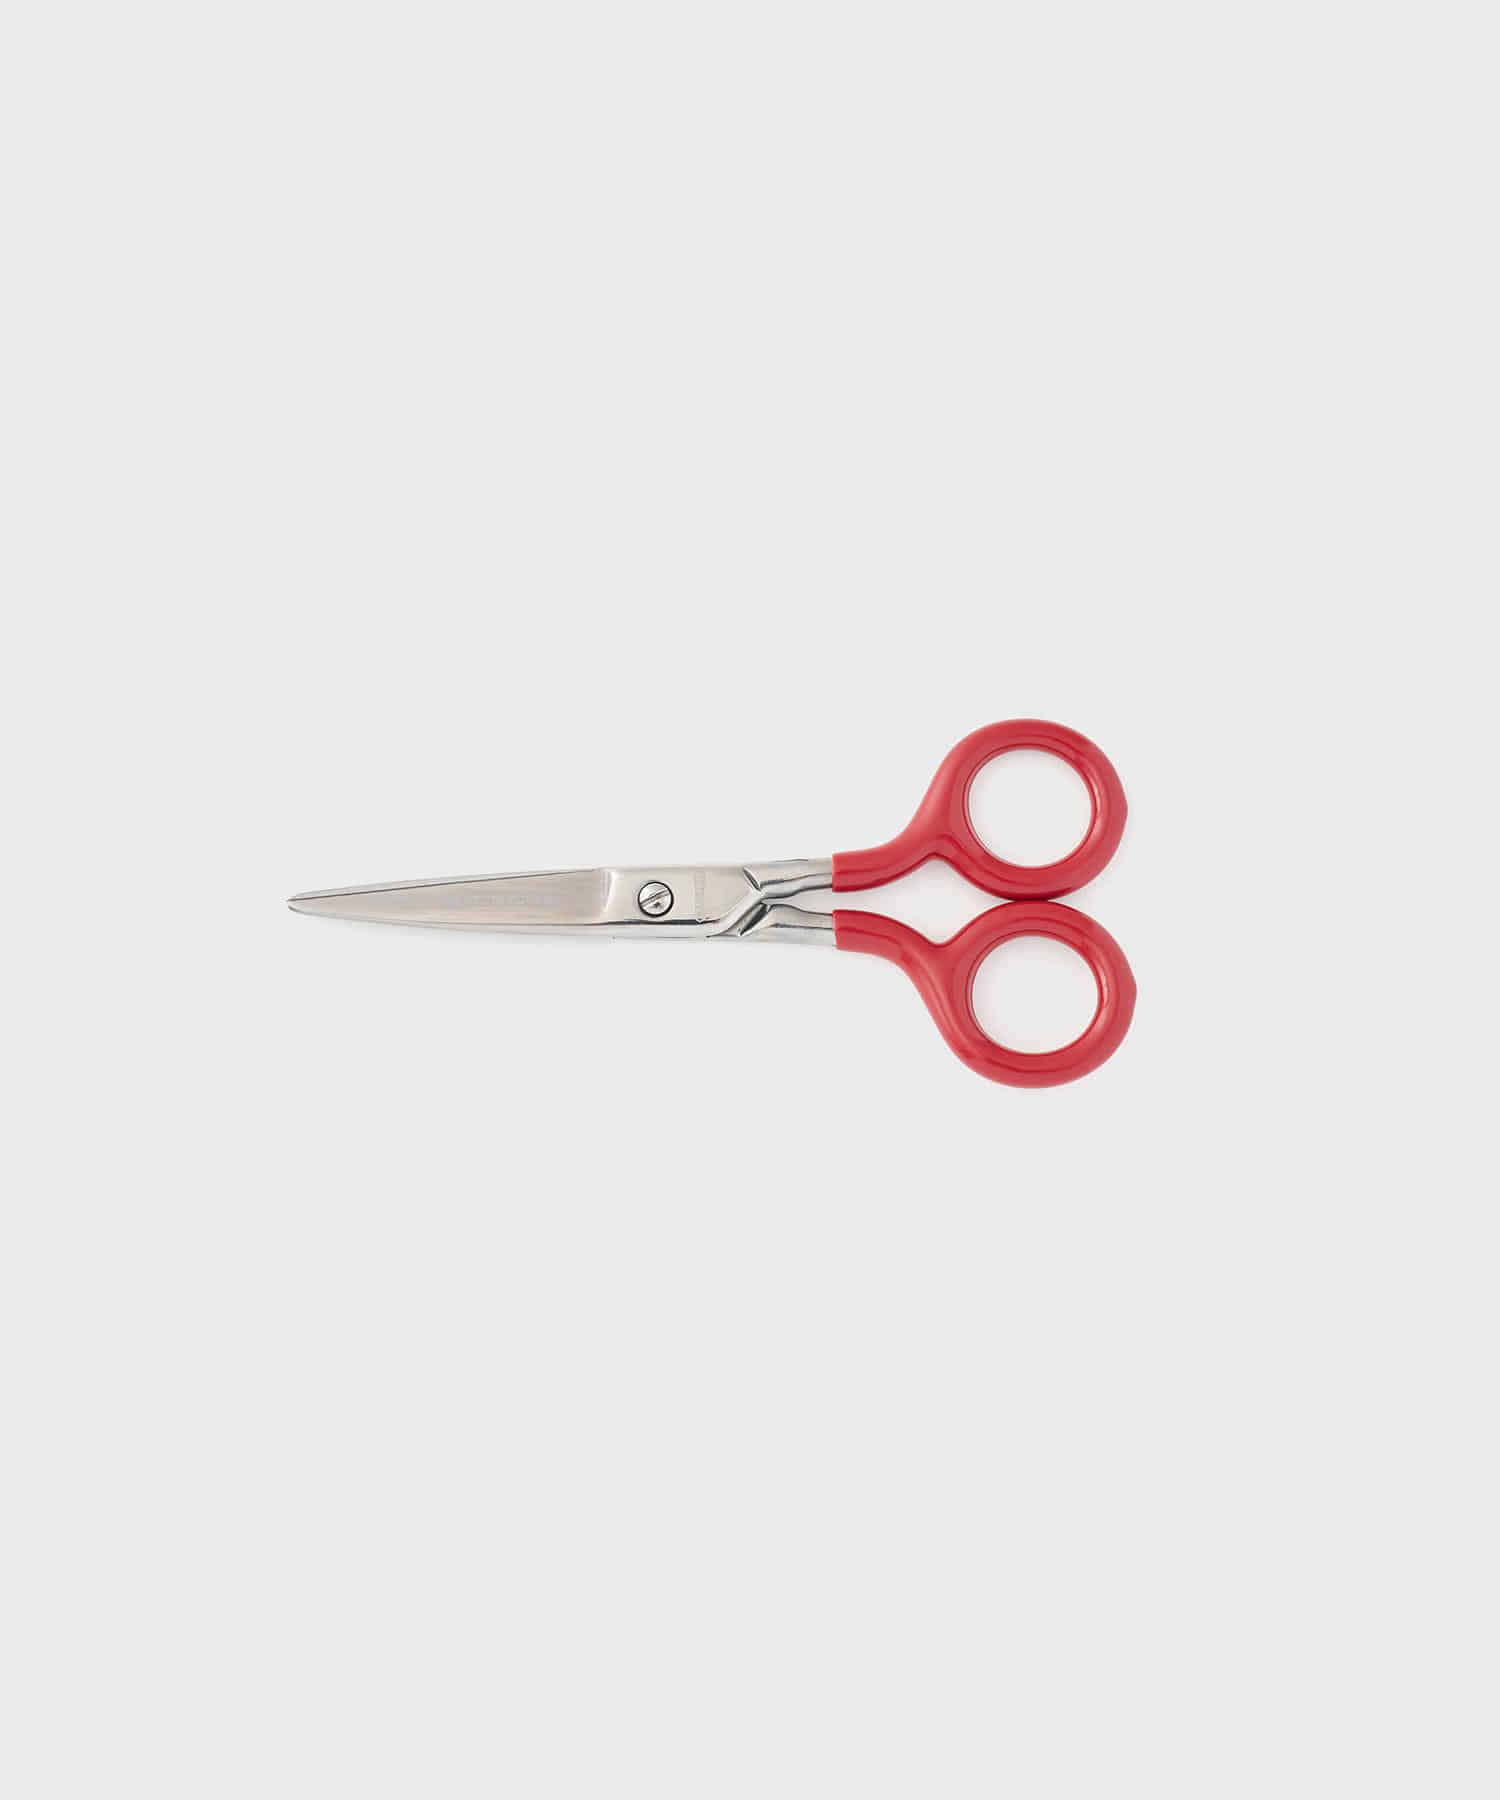 Penco Stainless Scissors (Red)